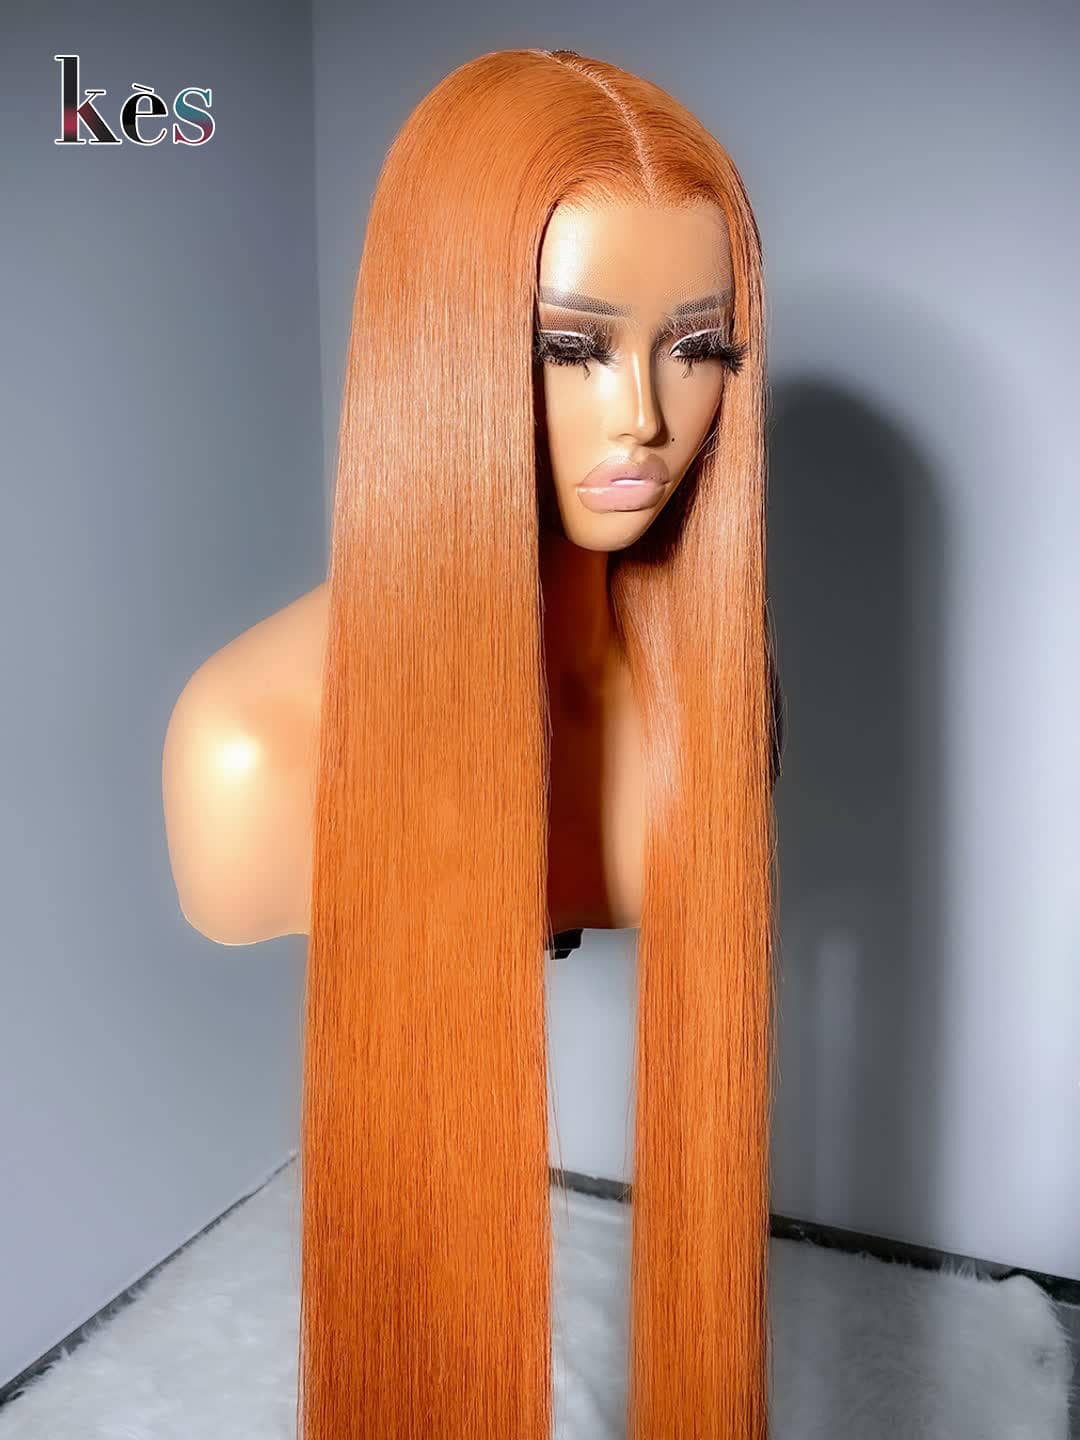 Keswigs virgin human hair HD Full Lace wigs 300 density straight wigs light brown color